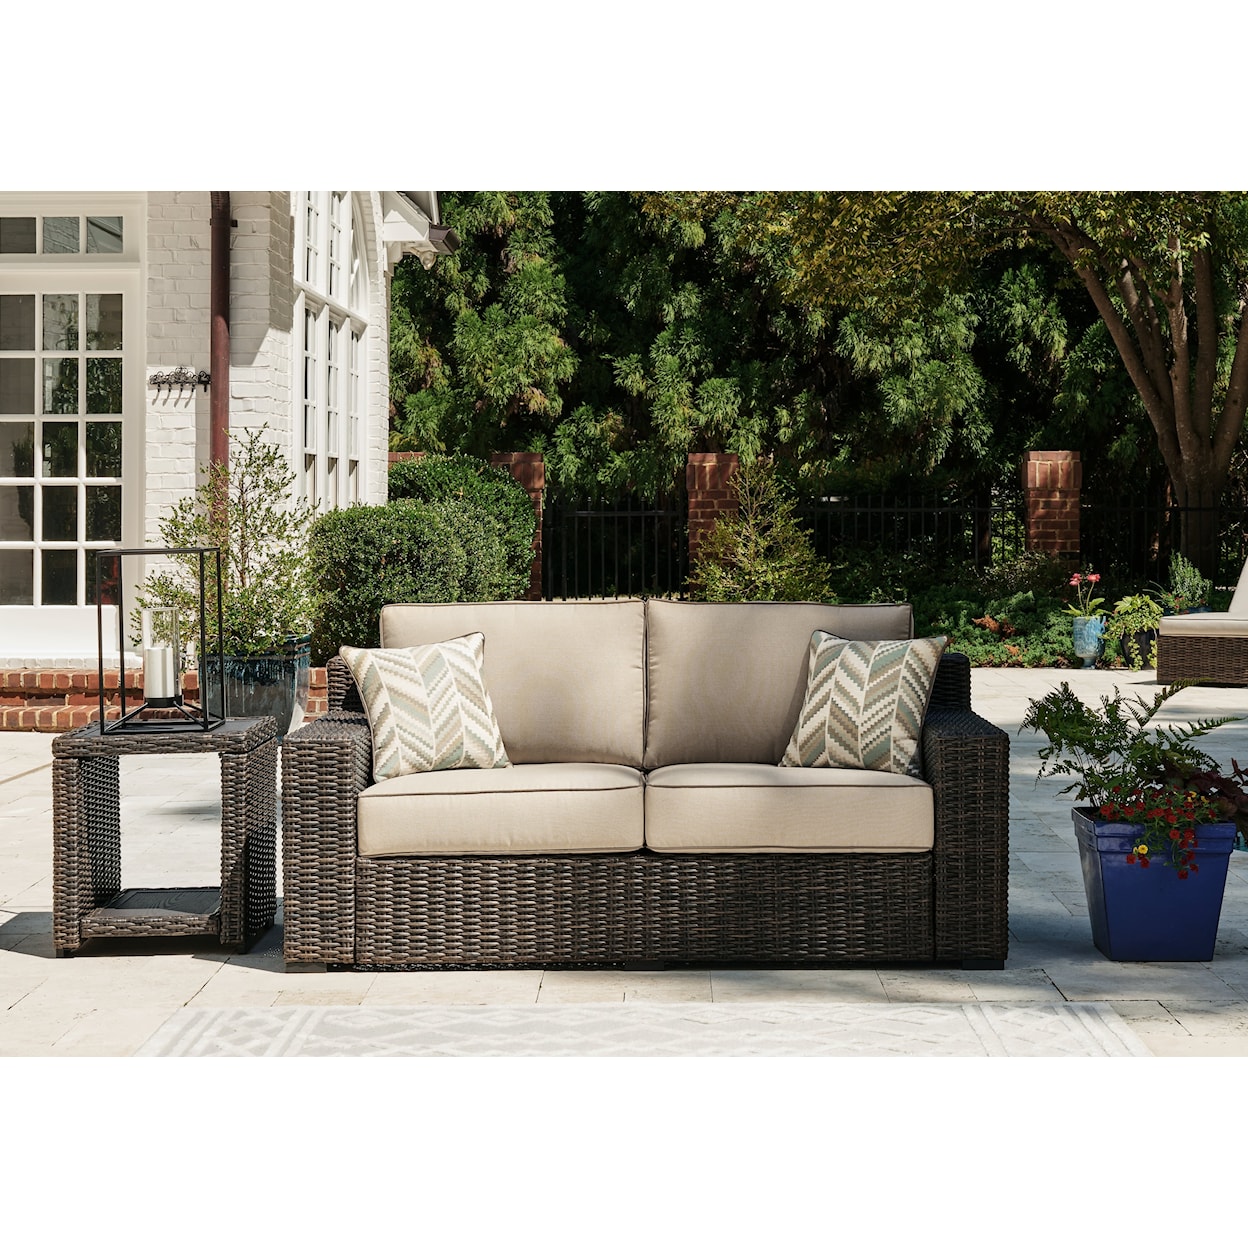 Ashley Furniture Signature Design Coastline Bay Outdoor Loveseat With Cushion